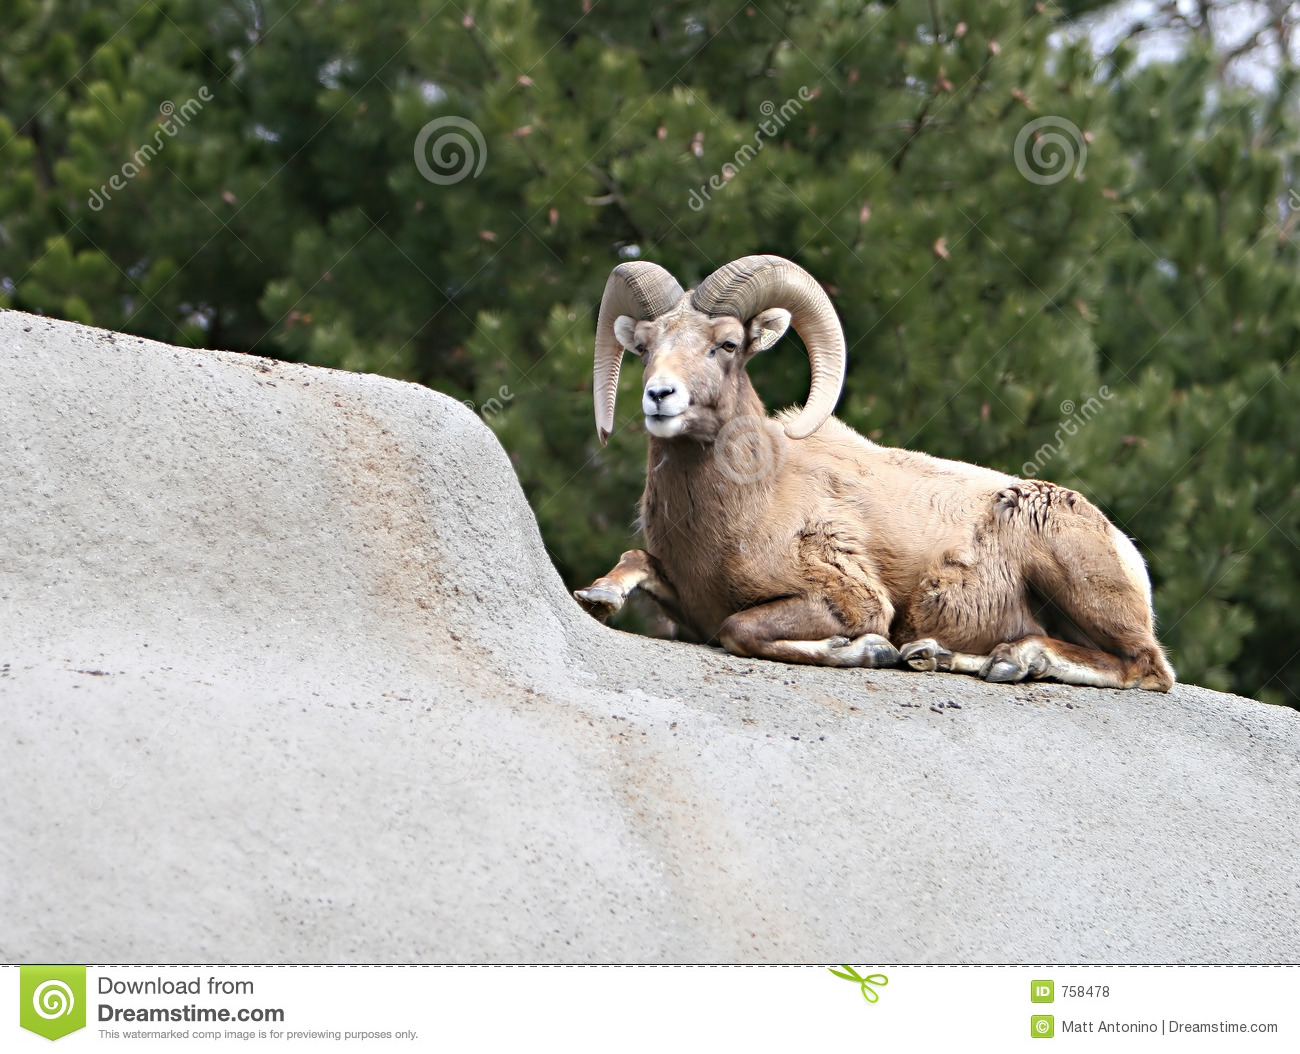 Big Horn Sheep Royalty Free Stock Photos   Image  758478